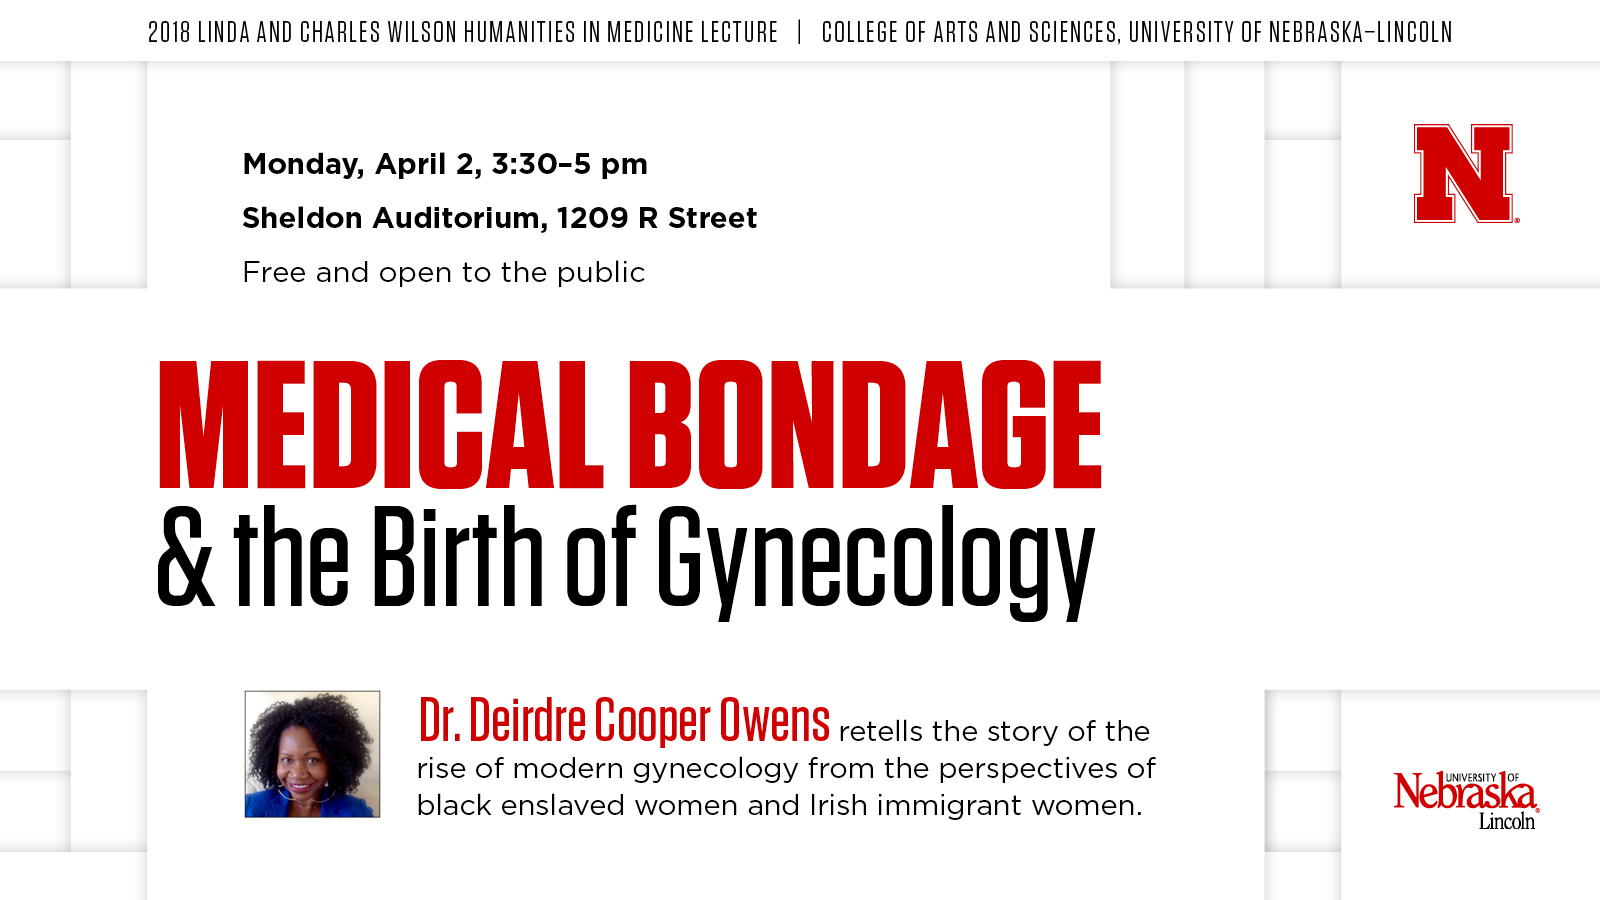 Event: "Medical Bondage & the Birth of Gynecology"